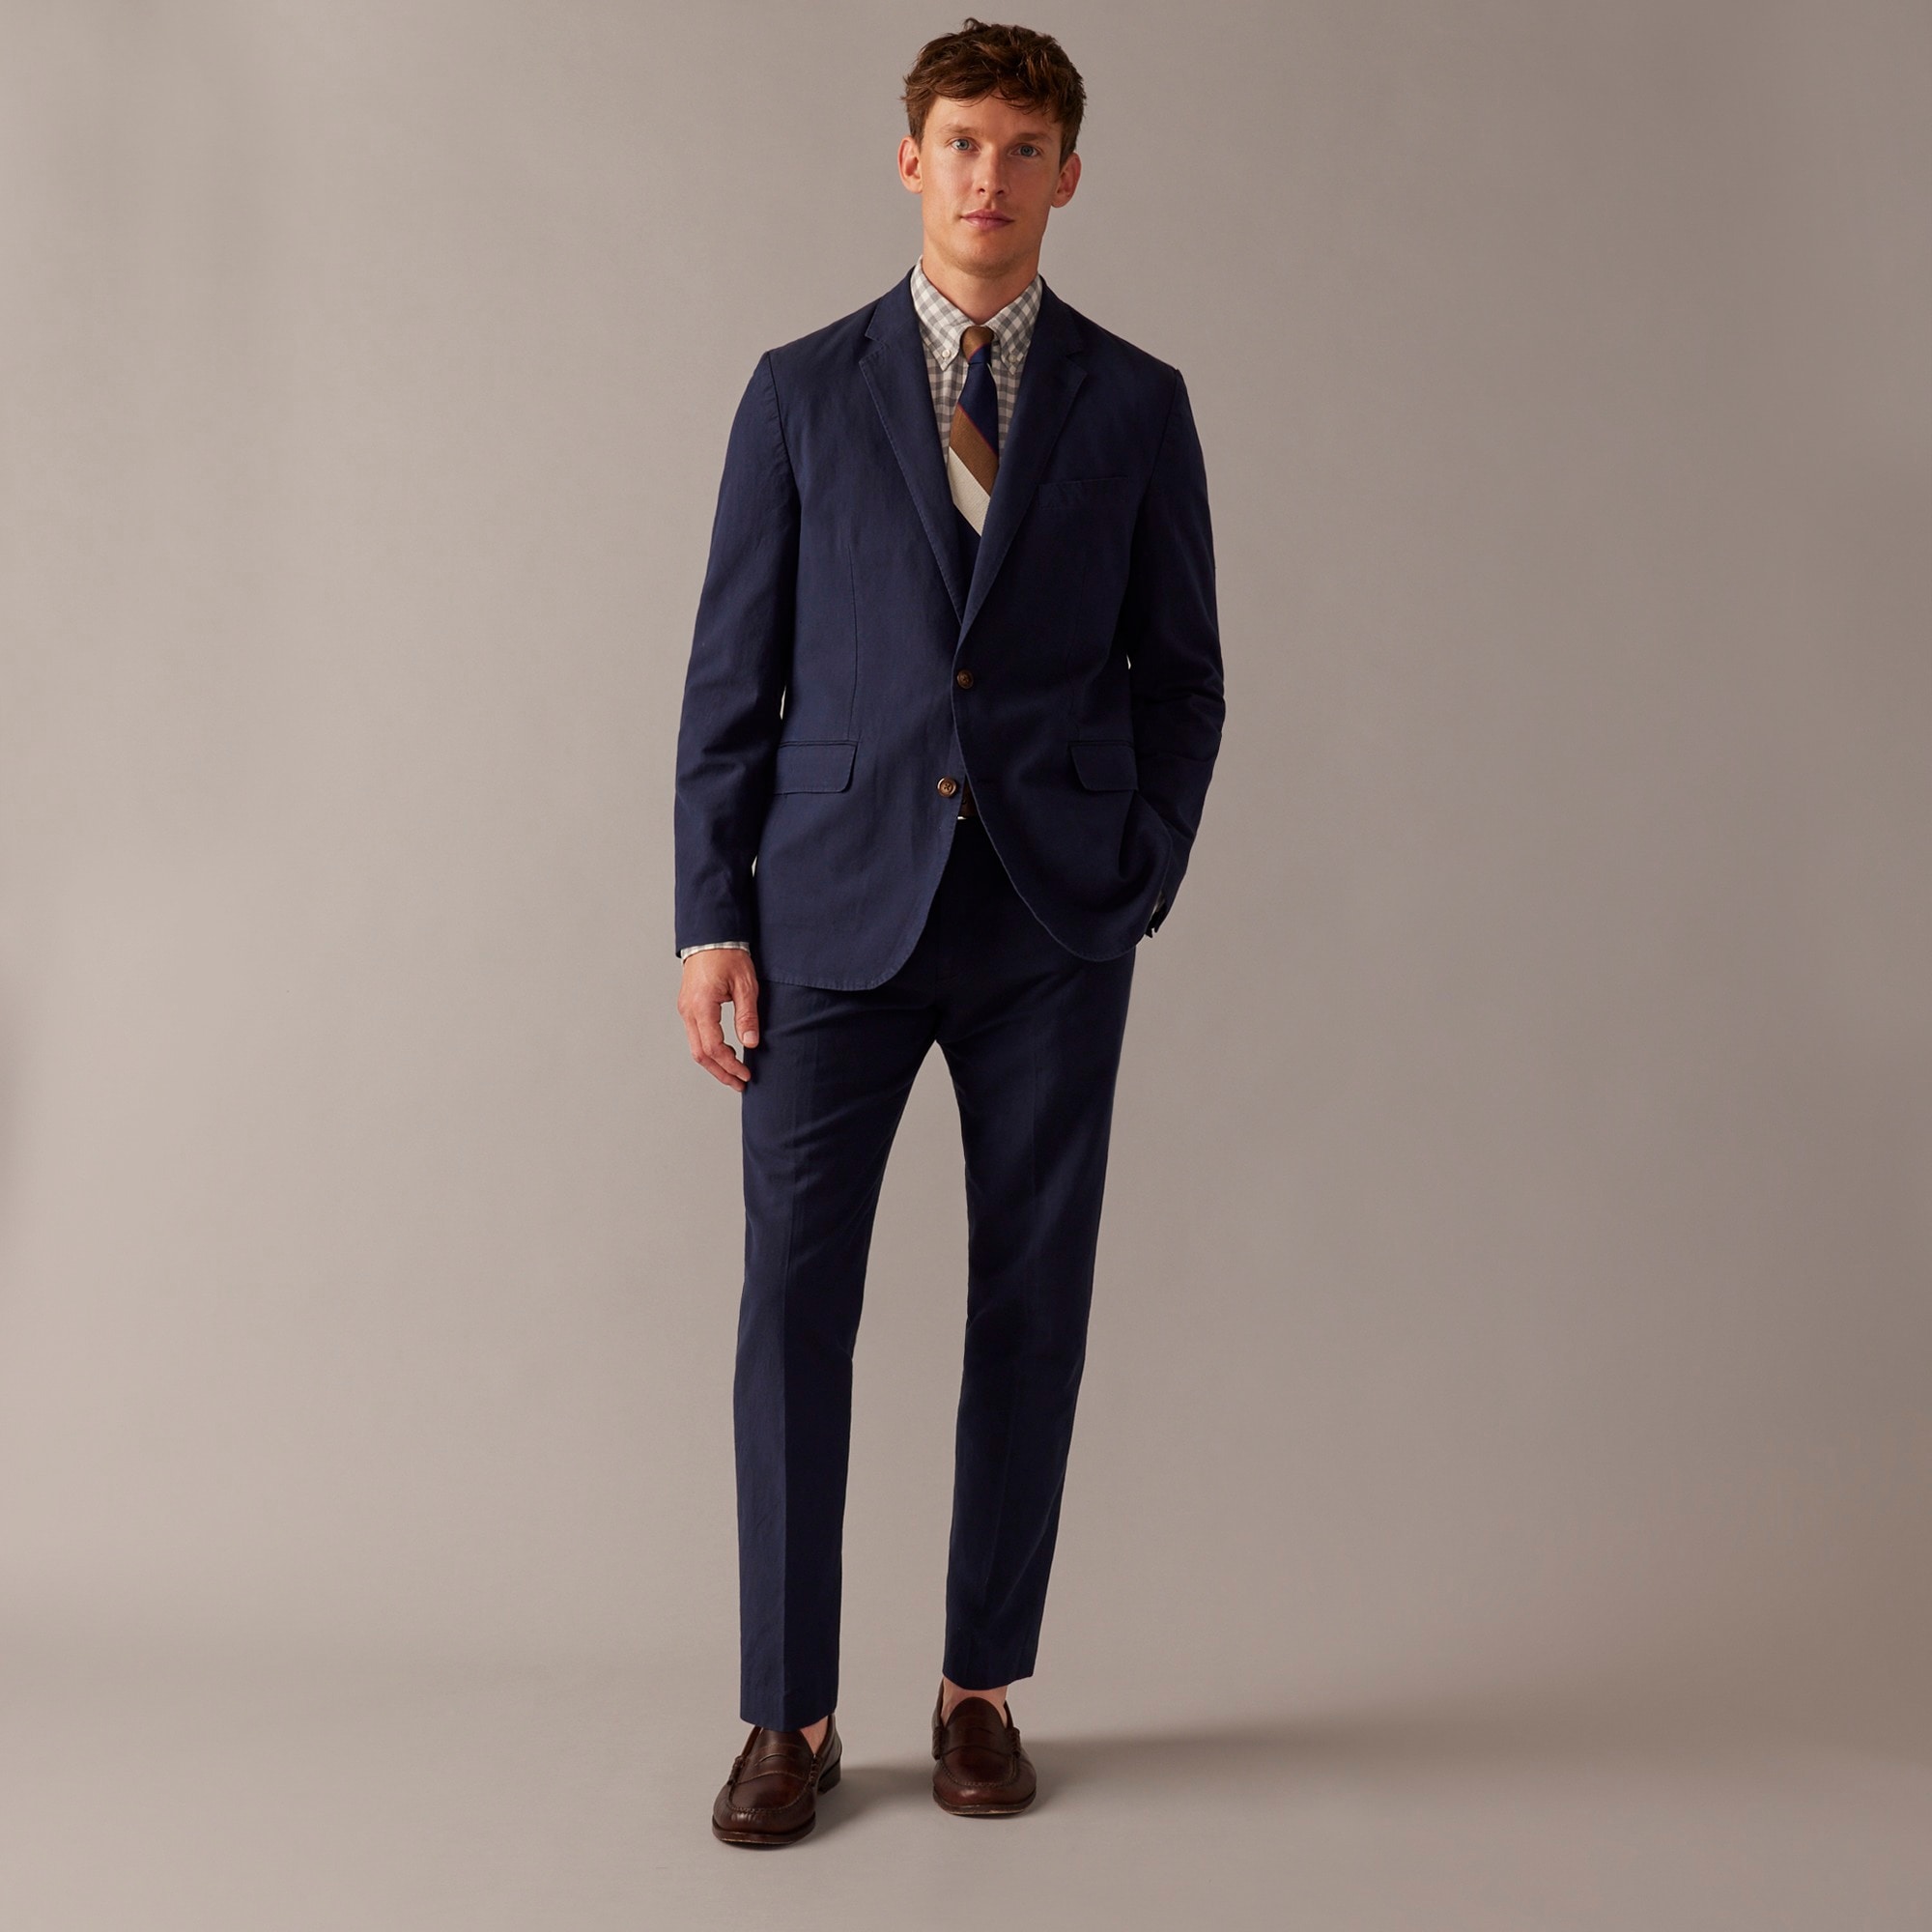 Jcrew Ludlow Slim-fit unstructured suit jacket in Irish cotton-linen blend